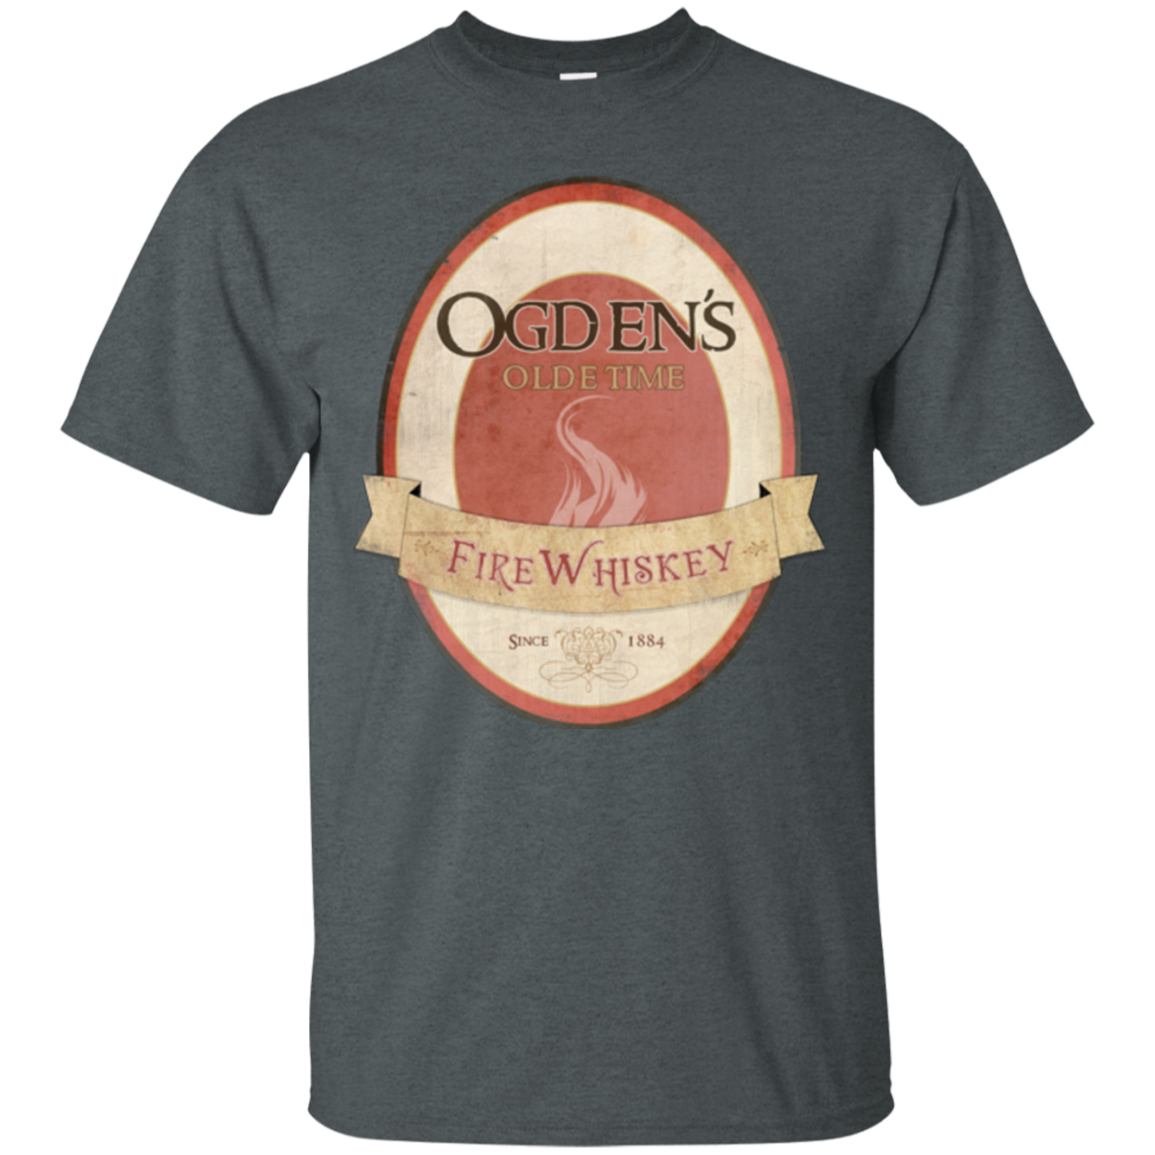 Ogdens Fire Whiskey T-Shirt